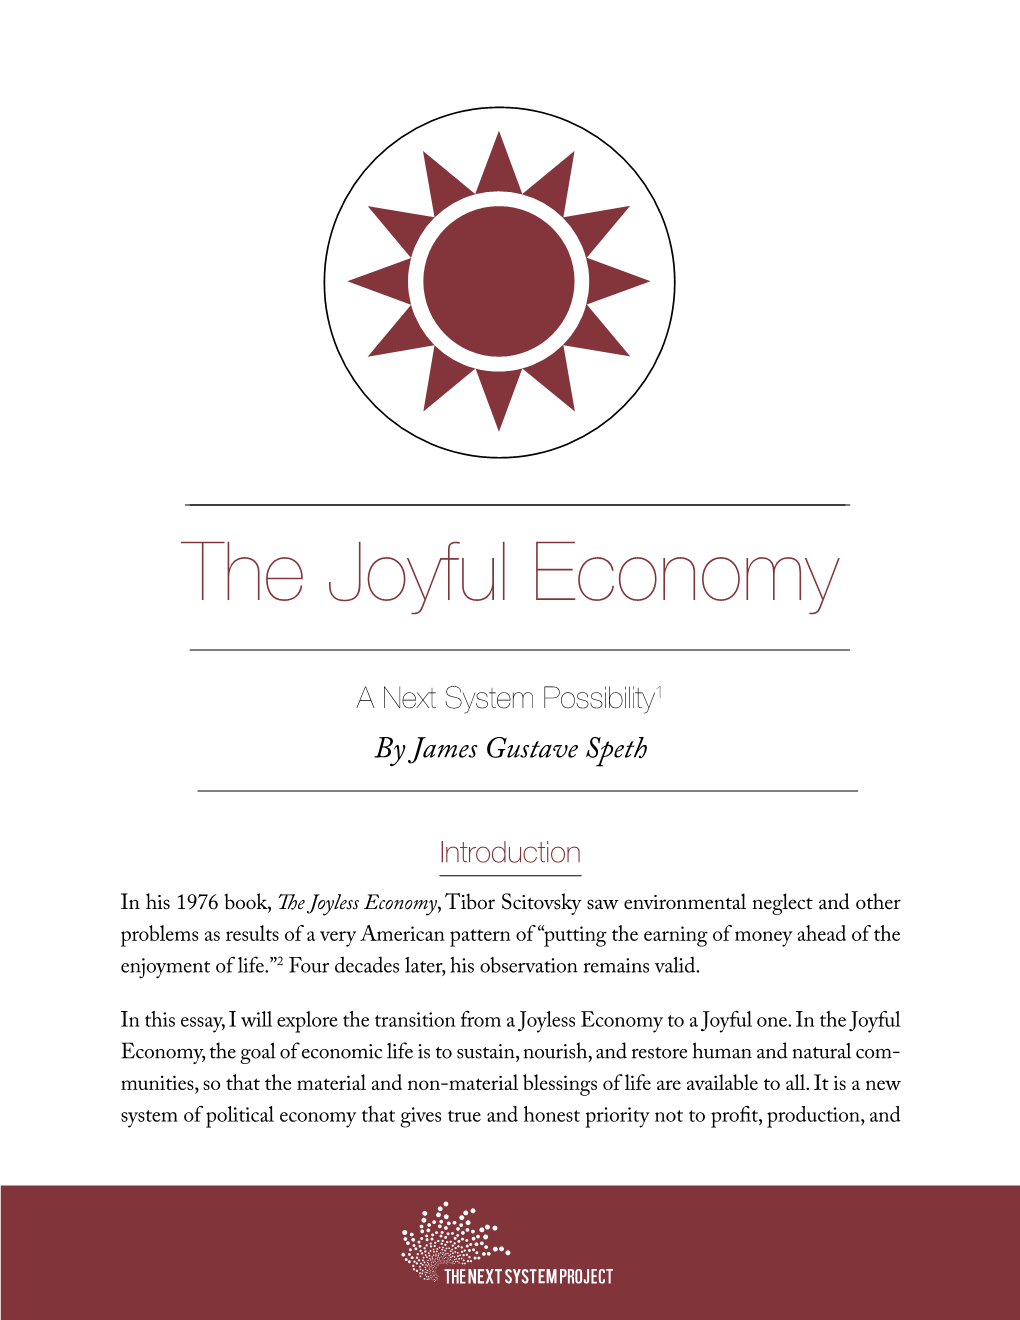 The Joyful Economy